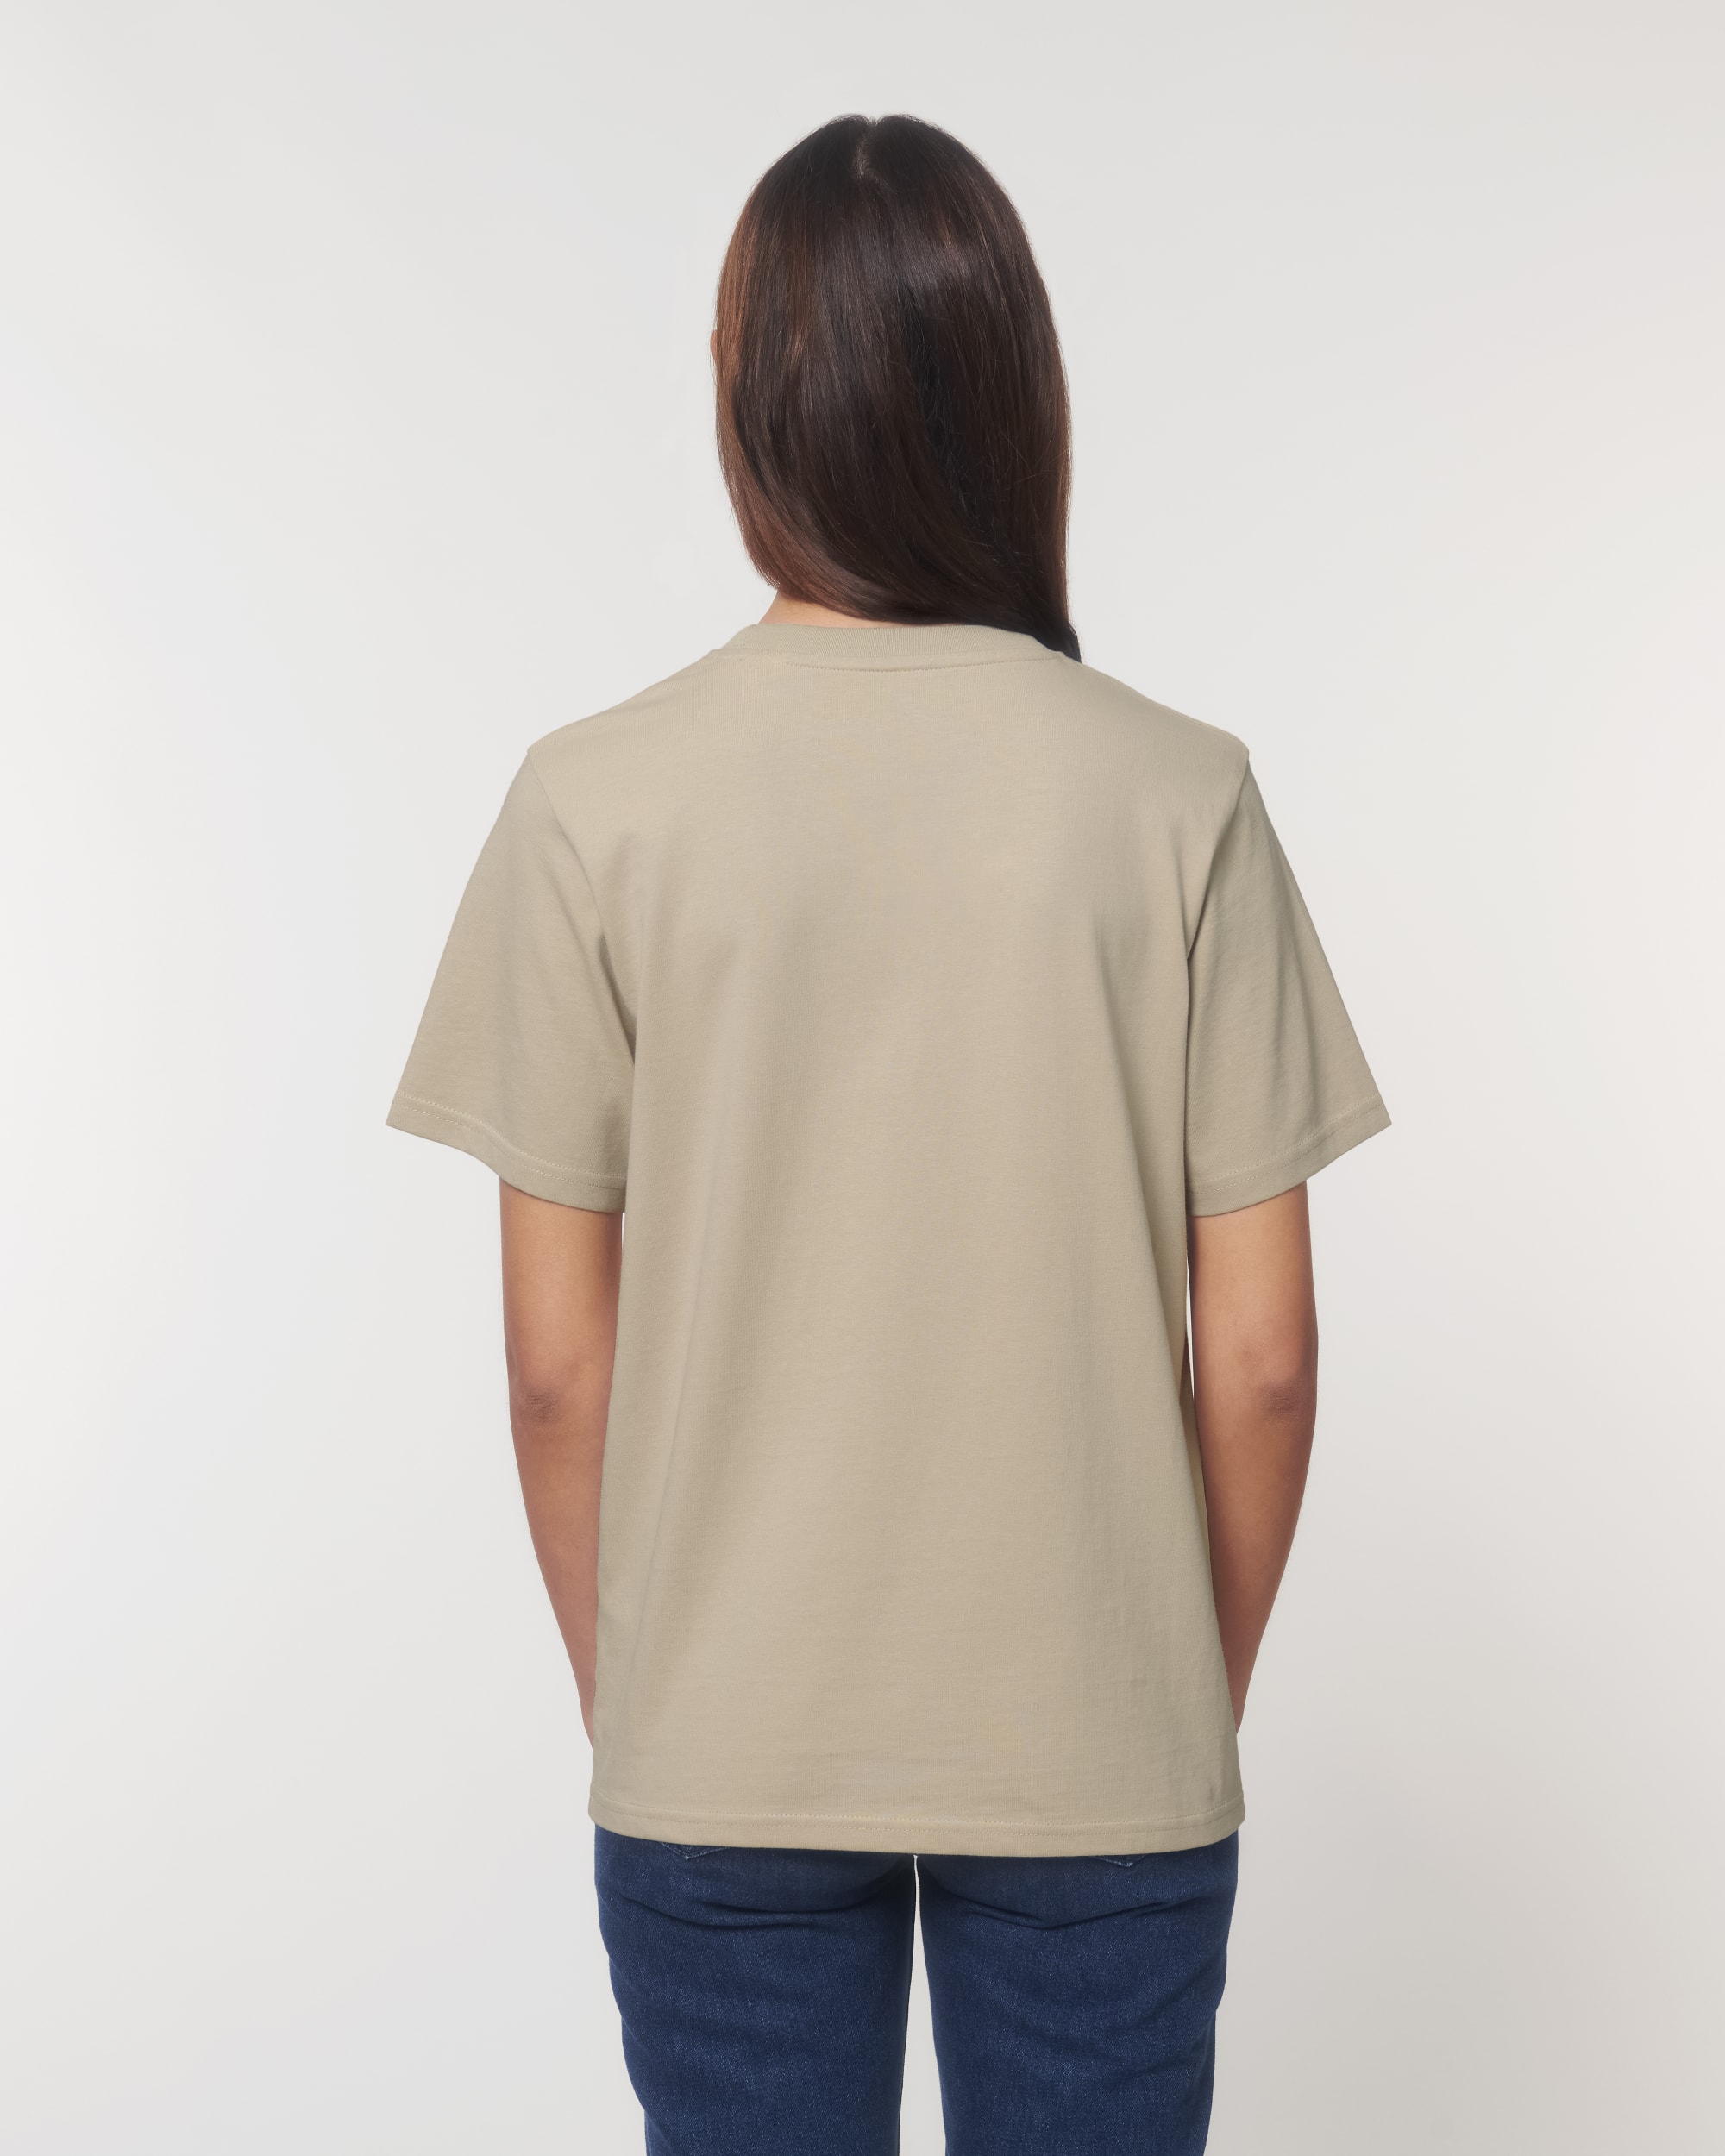 GLORYWAVES BASICS Sparker T-Shirt unisex